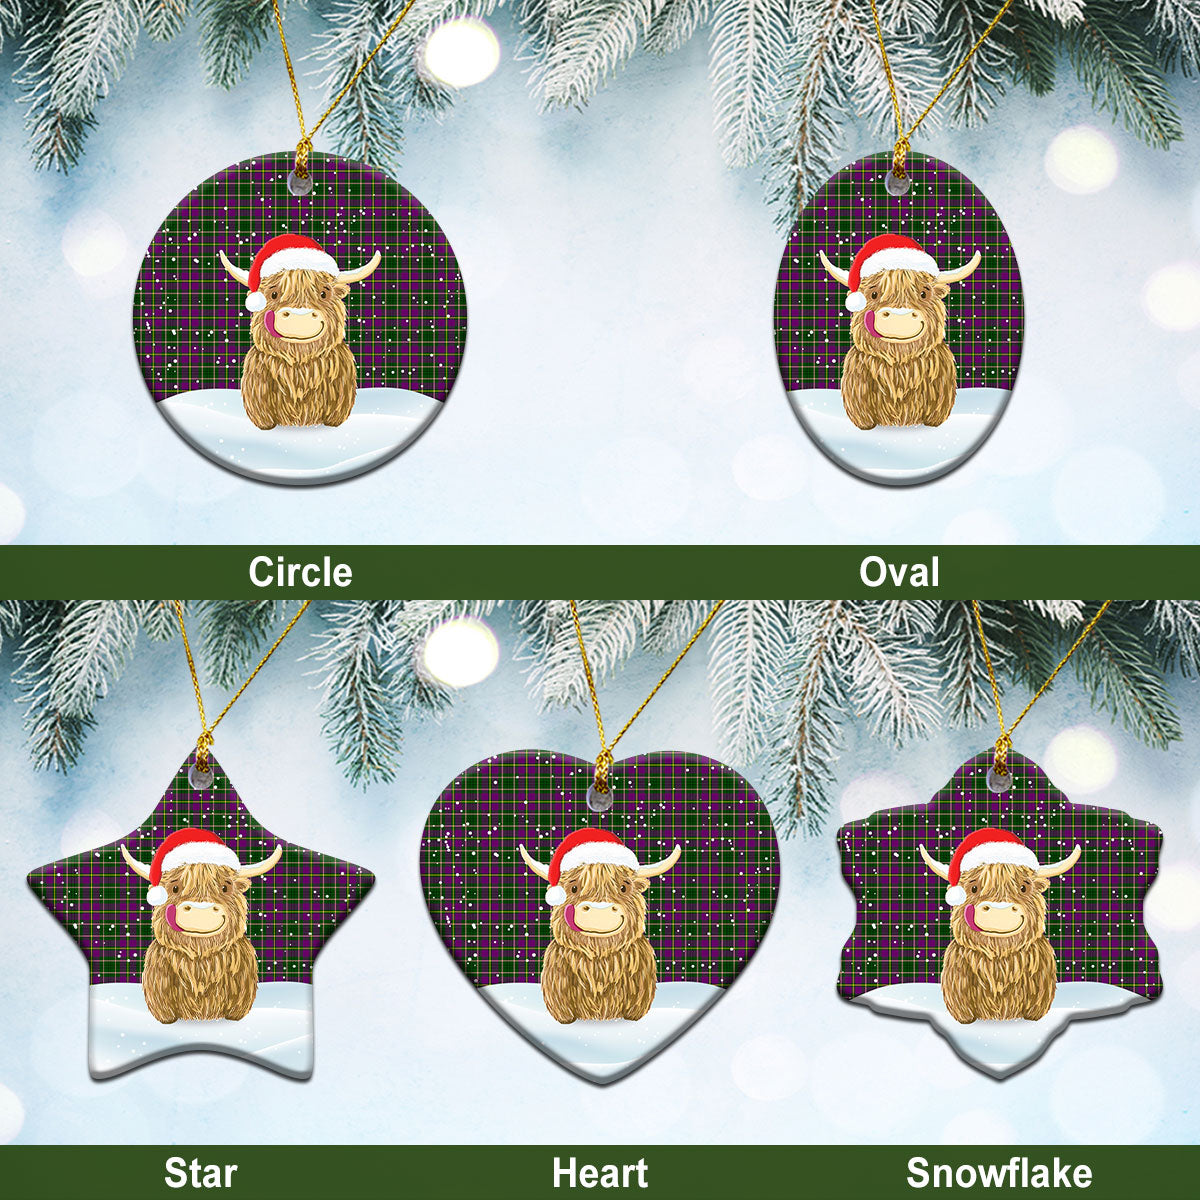 Tailyour Tartan Christmas Ceramic Ornament - Highland Cows Style